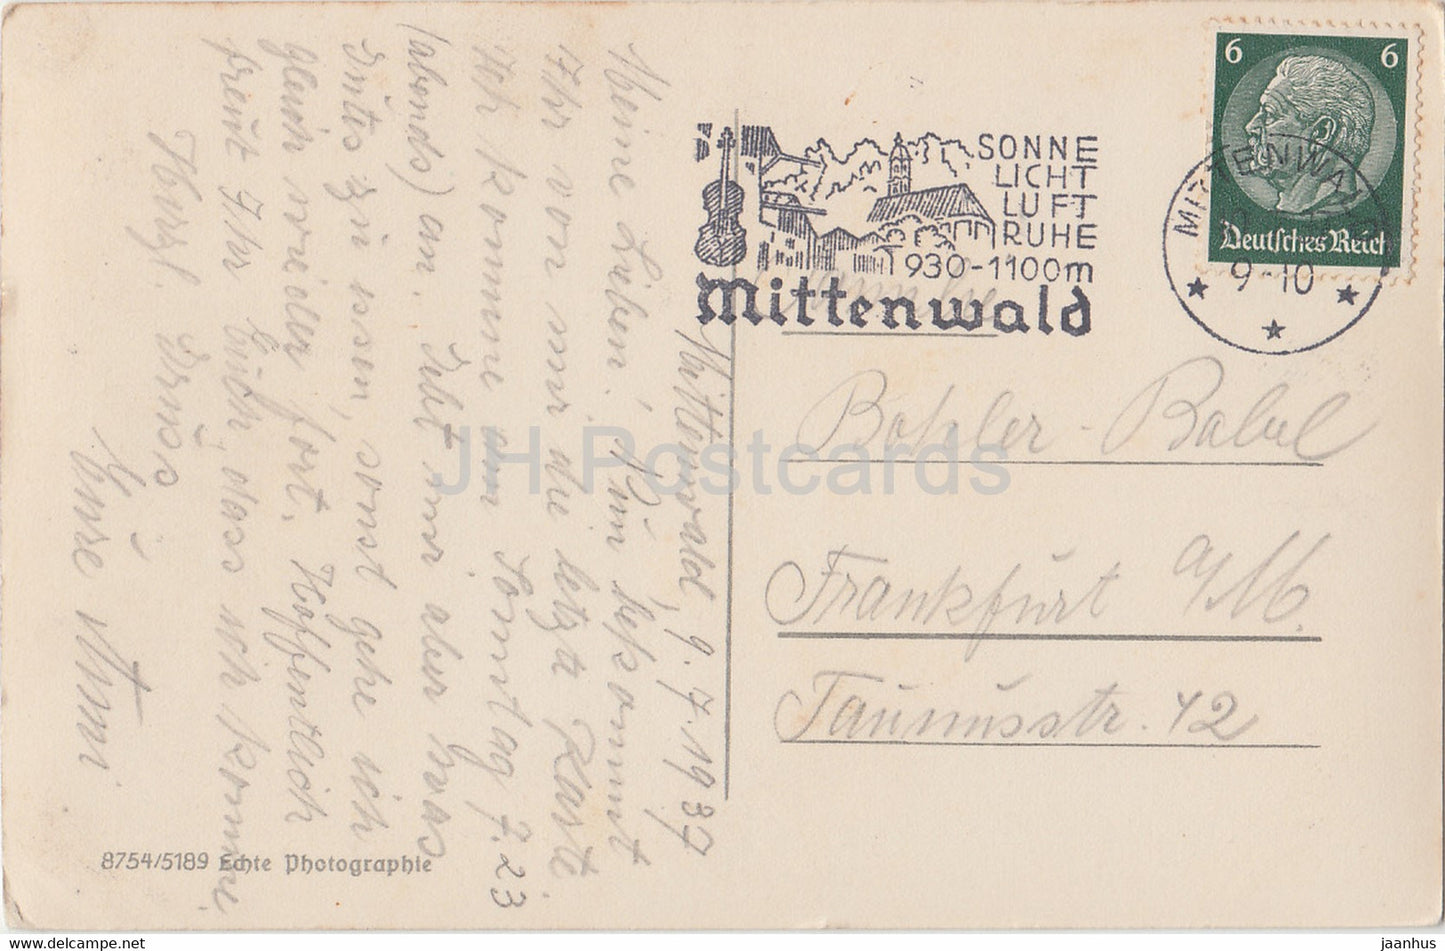 Munchen - Theatinekirche - Feldherrnhalle - old car - Munich - old postcard - 1937 - Germany - used